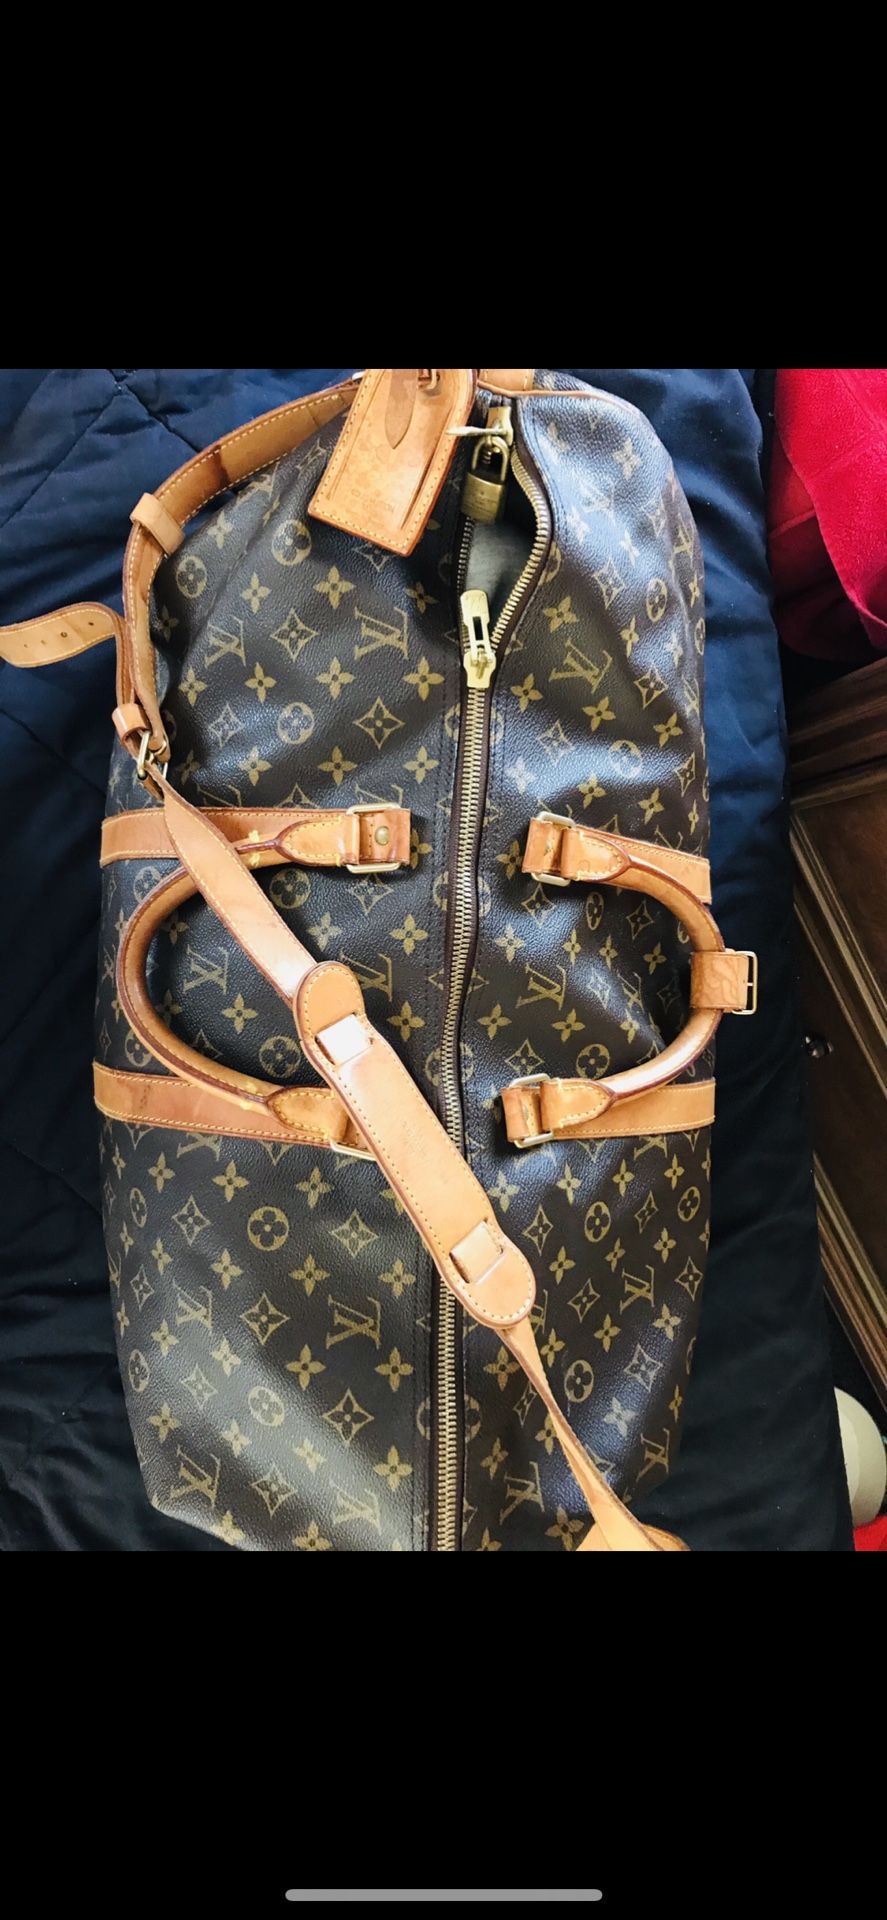 $600 Luxury bag 💼Italy france $600 